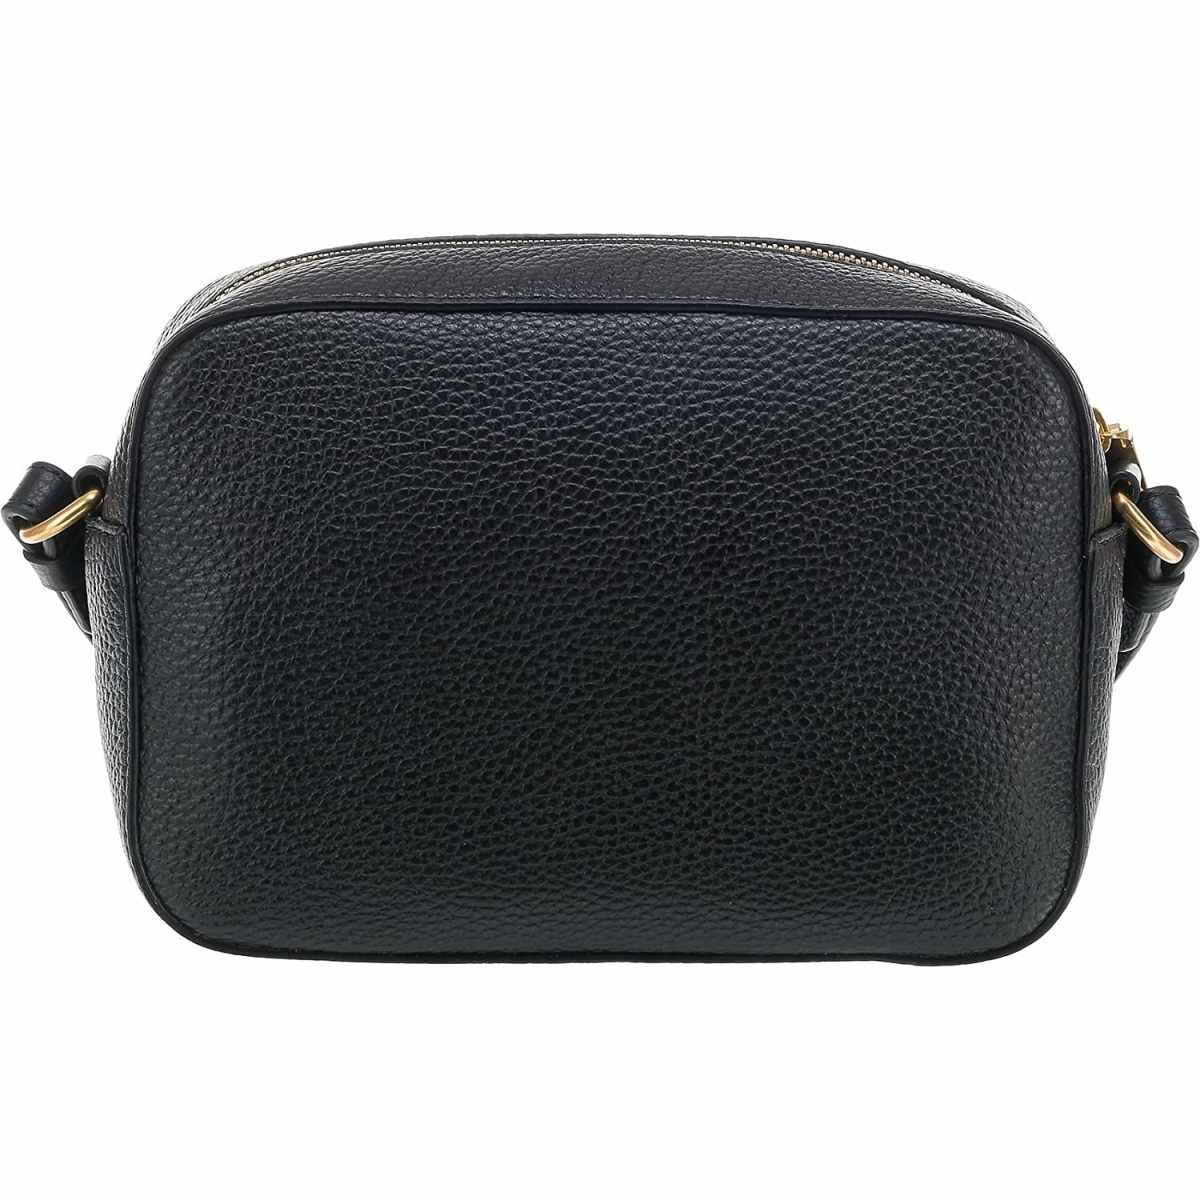 Beat soft handbag grained leather